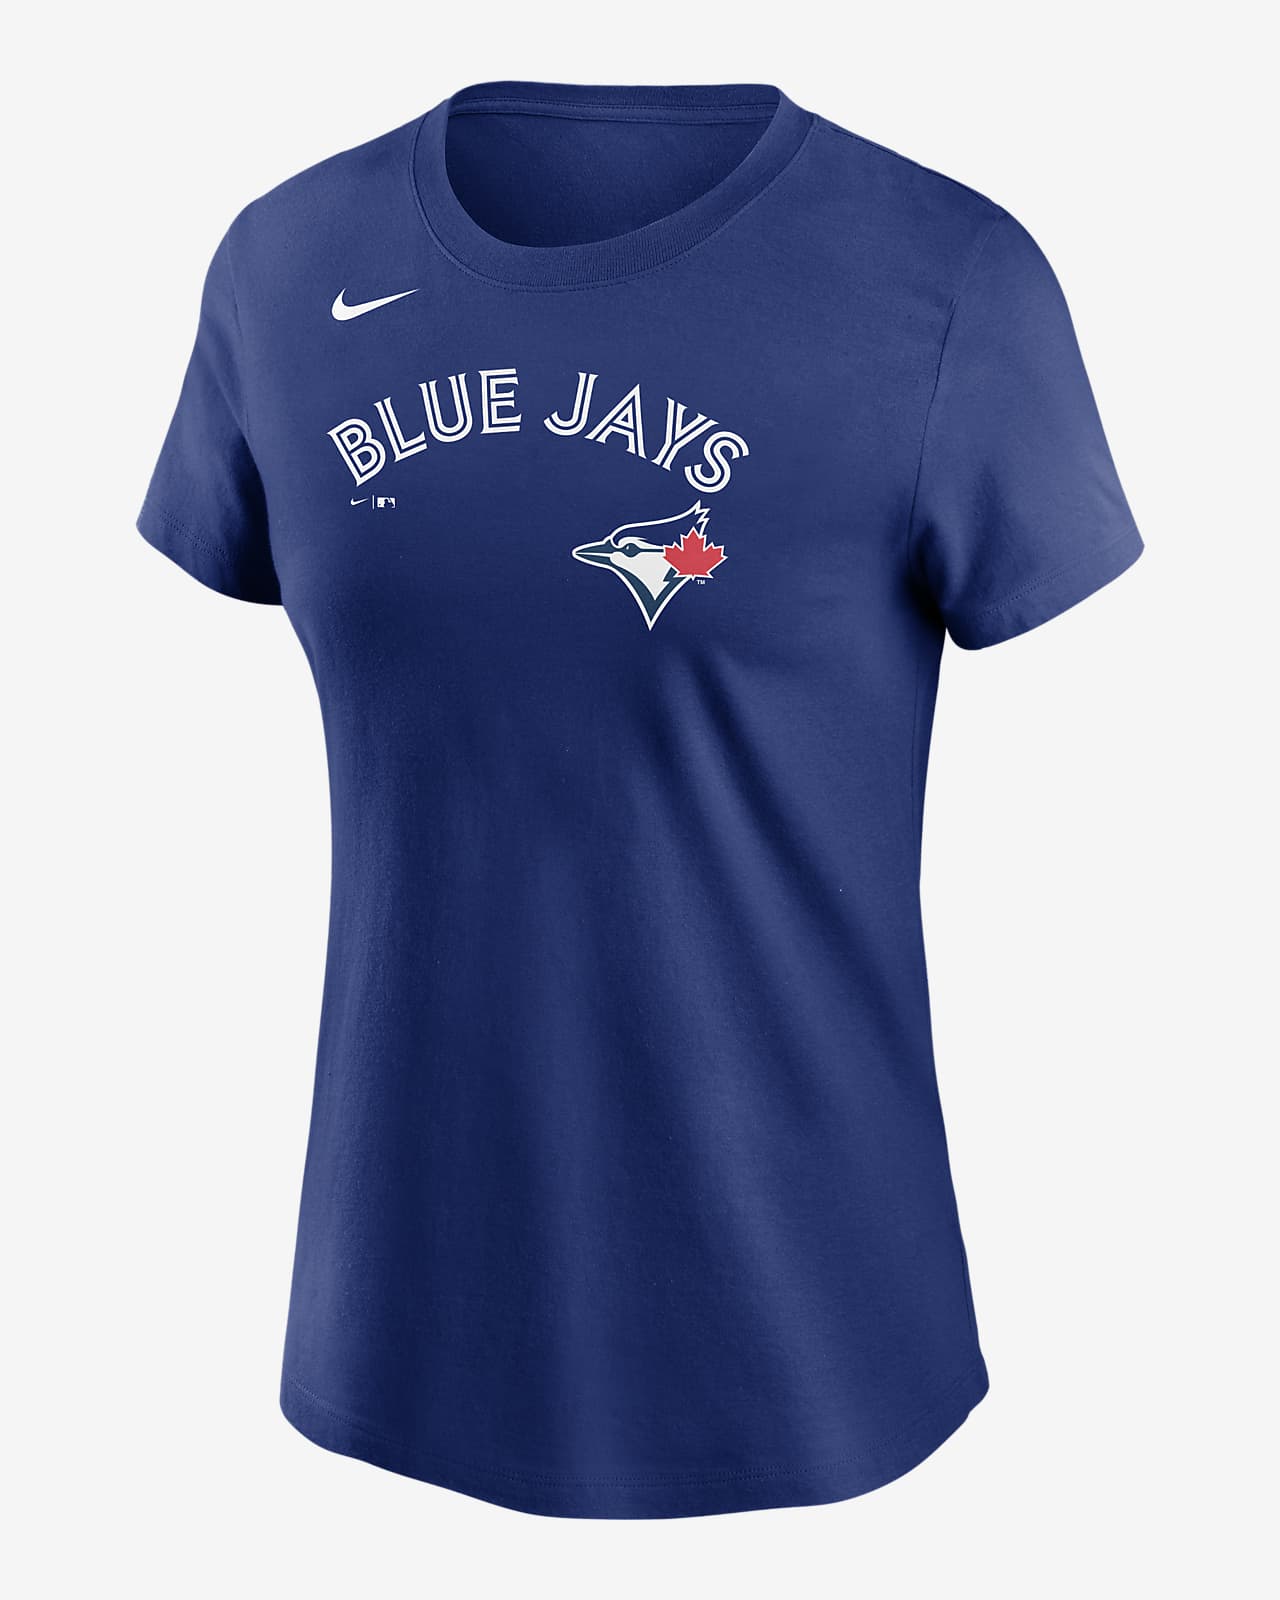 blue jays shirt womens